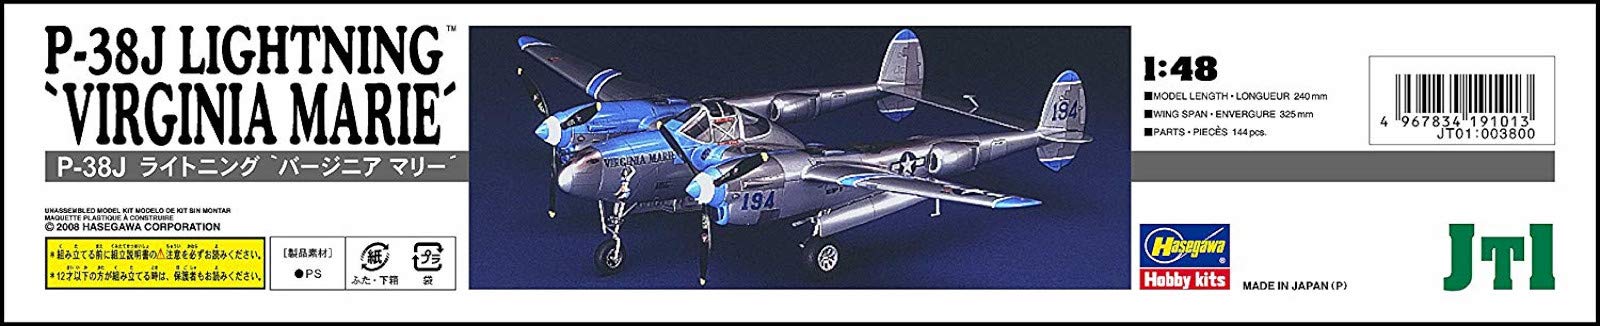 HASEGAWA 1/48 P-38J Lightning 'Virginia Marie' U.S. Army Air Force Fighter Plastic Model